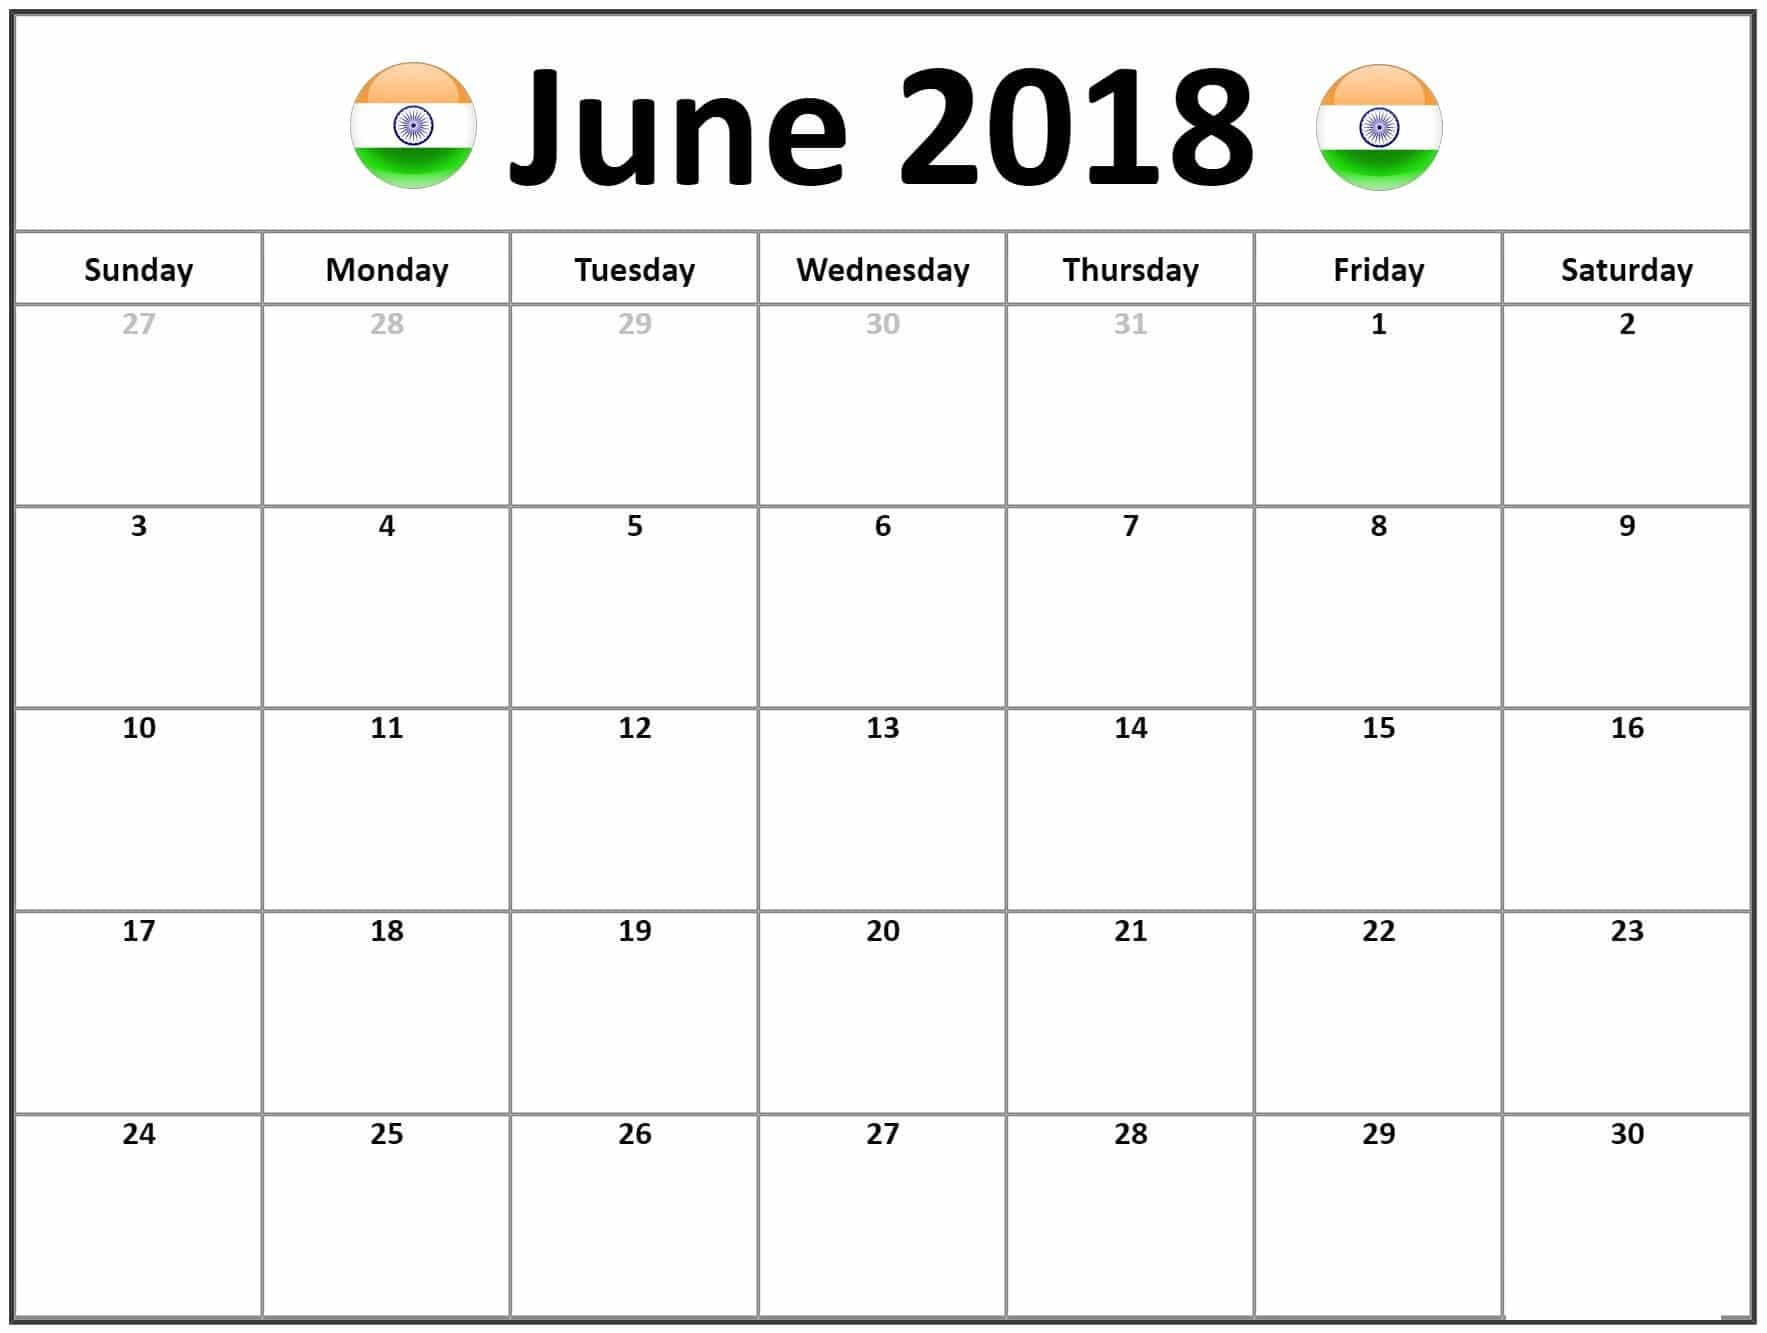 june-2018-calendar-india-holidays-and-festivals-oppidan-library